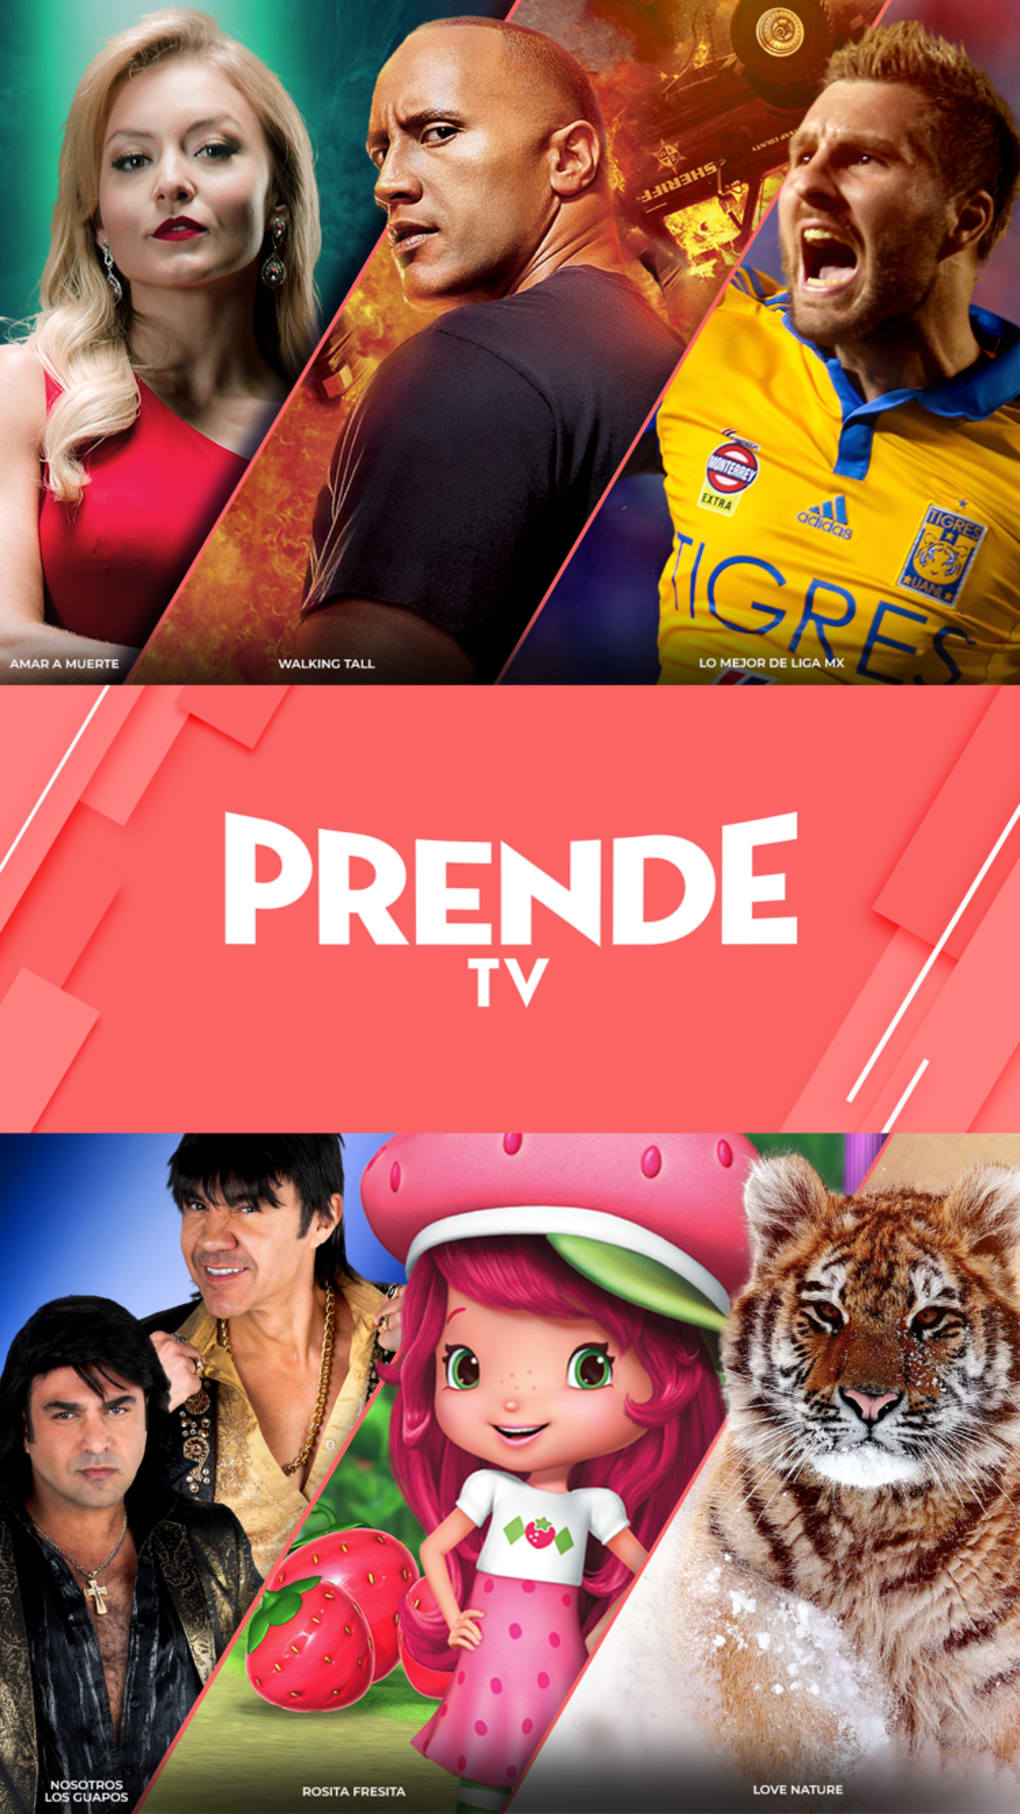 PrendeTV: TV and Movies FREE in Spanish Screenshot2